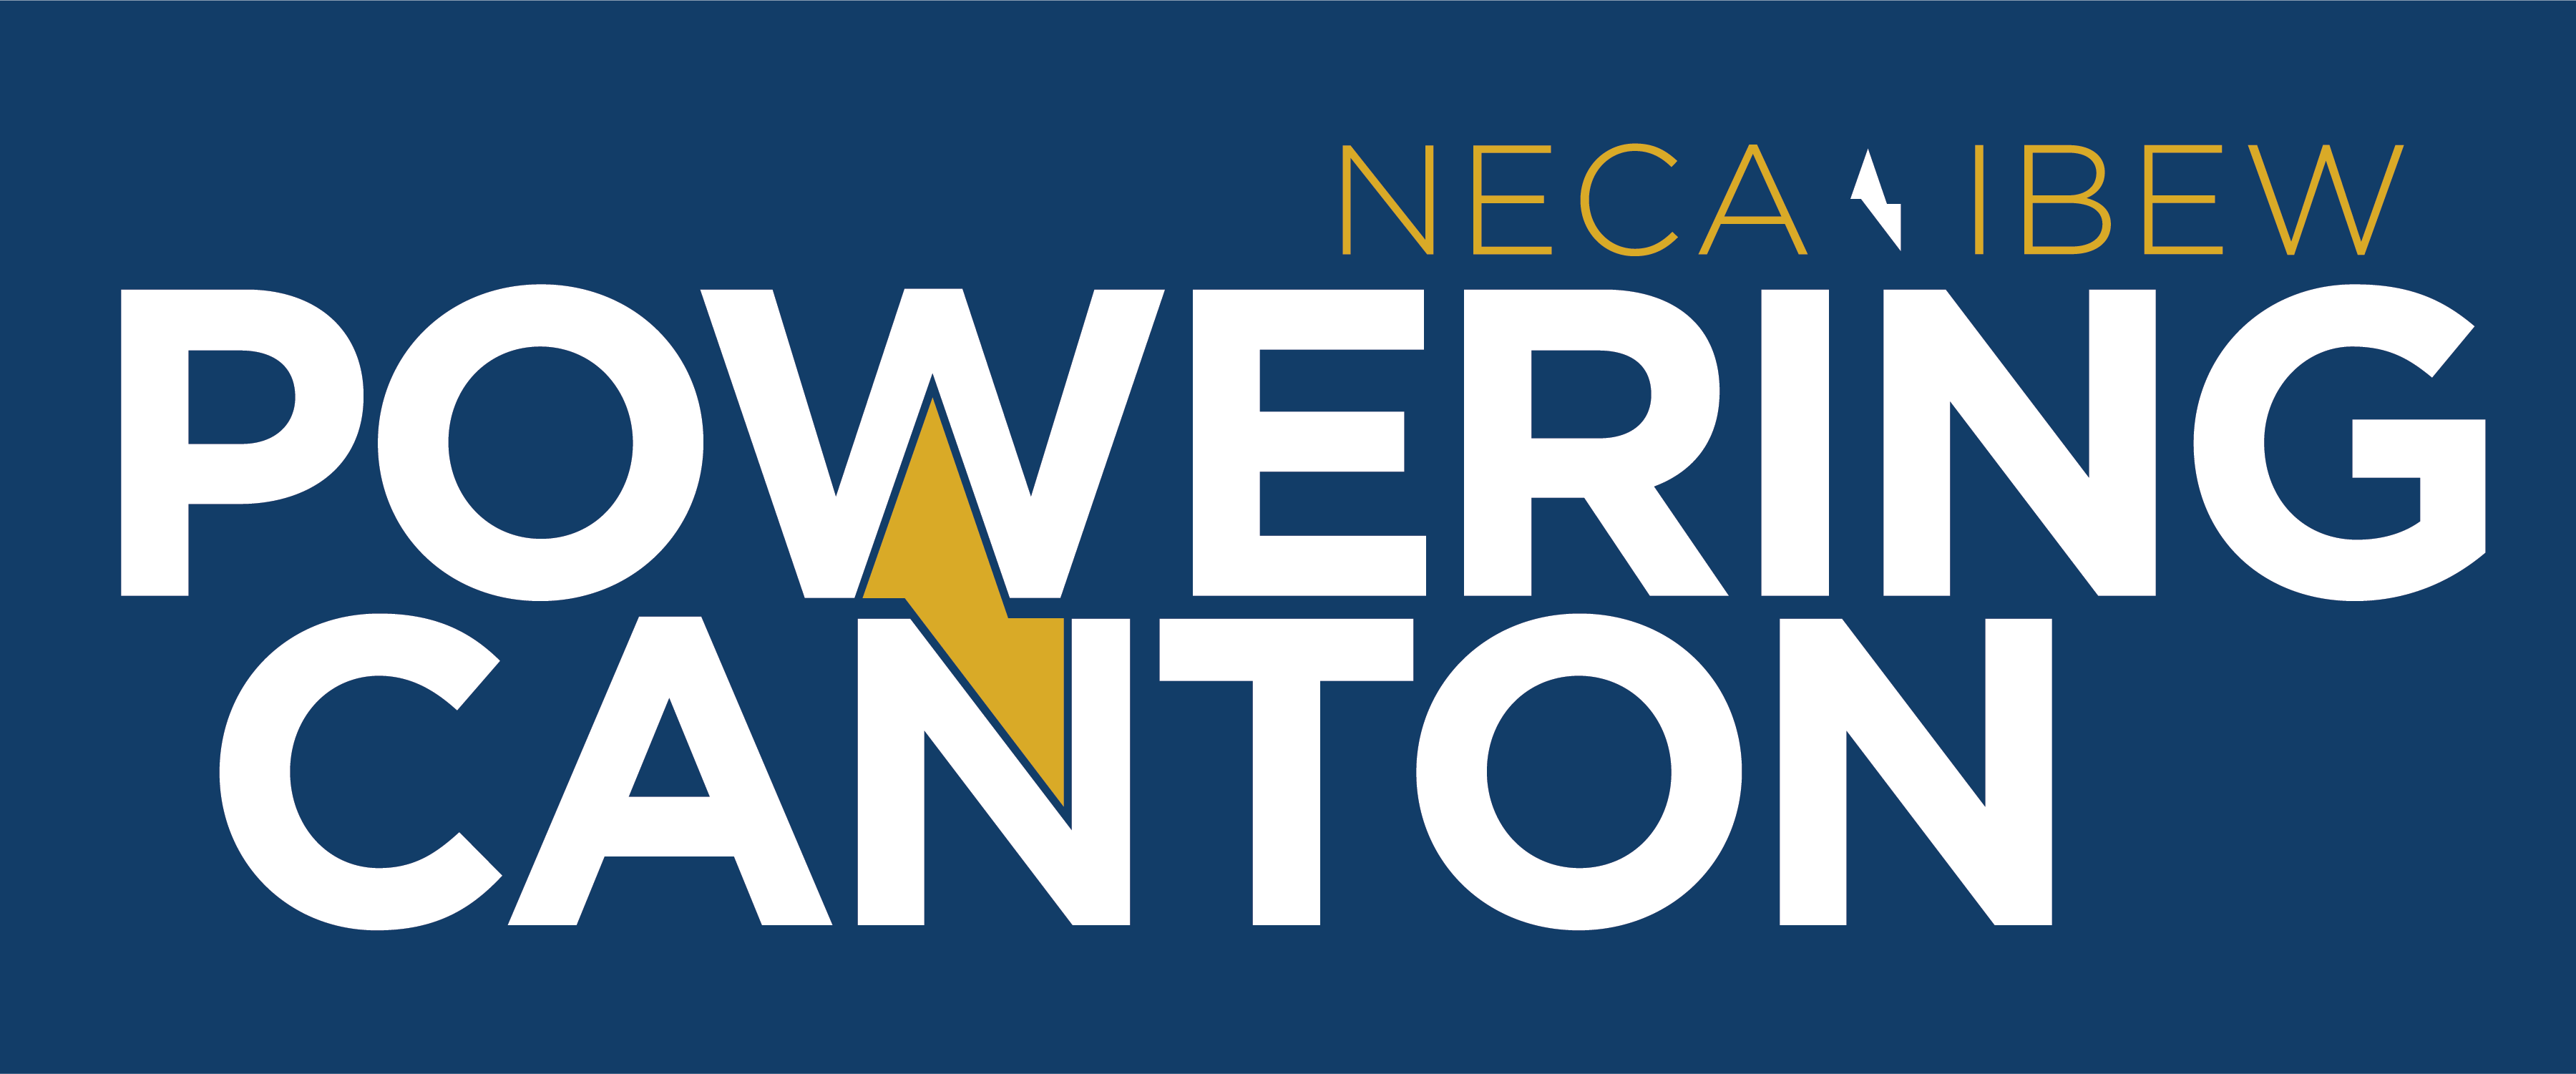 NECA - National Electrical Contractors Association & IBEW Local 540 - Wristband Sponsor